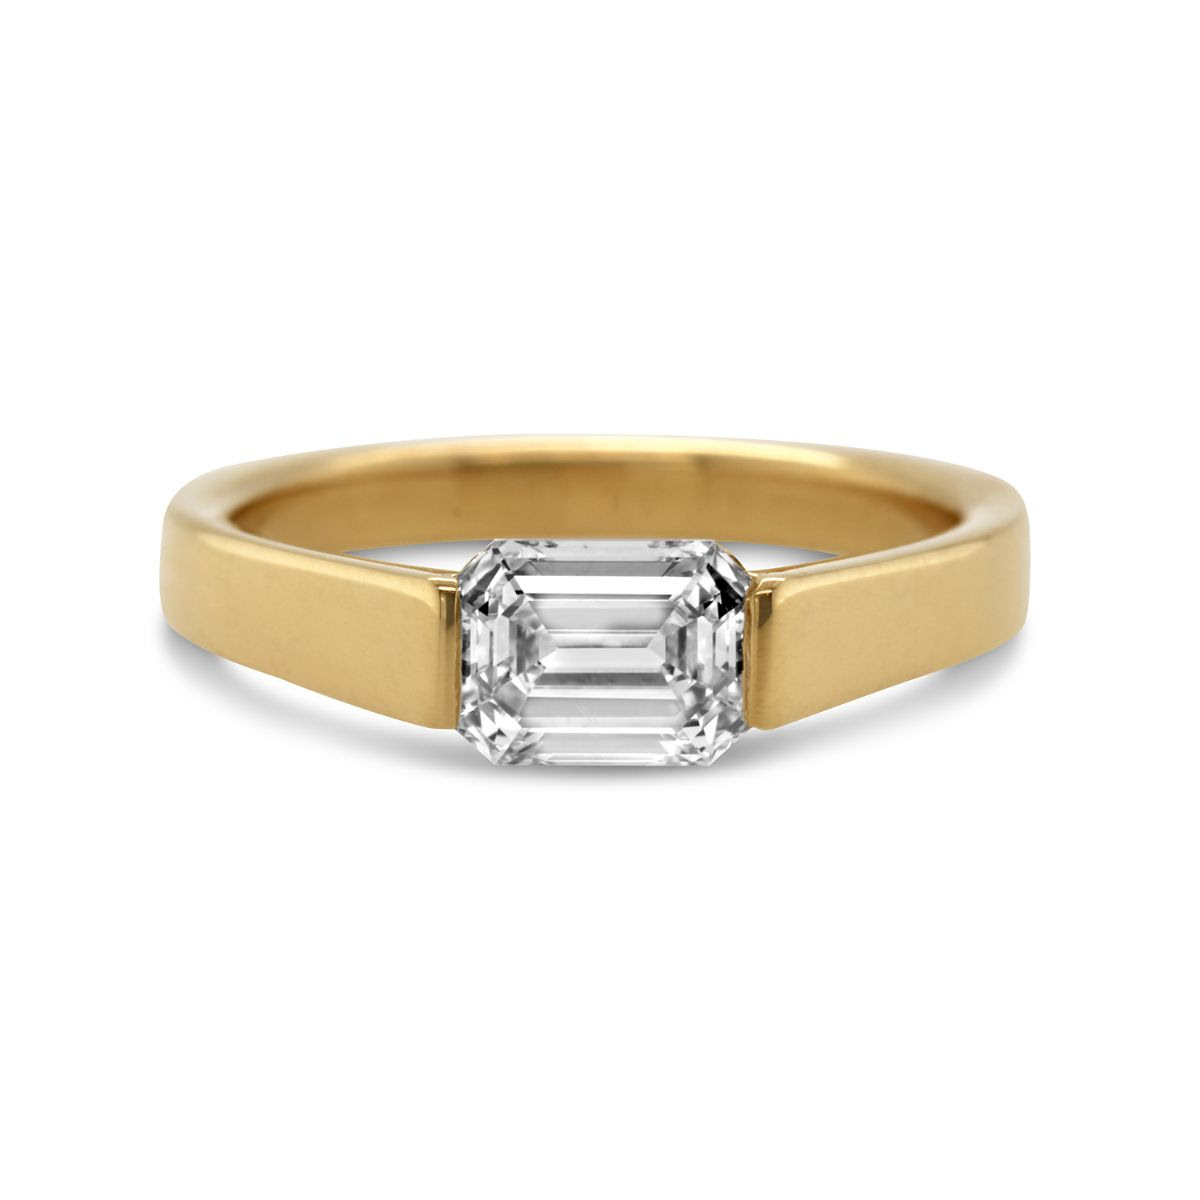 Emerald cut diamond pontis ring by ronan campbell at designyard contemporary jewellery dublin ireland 